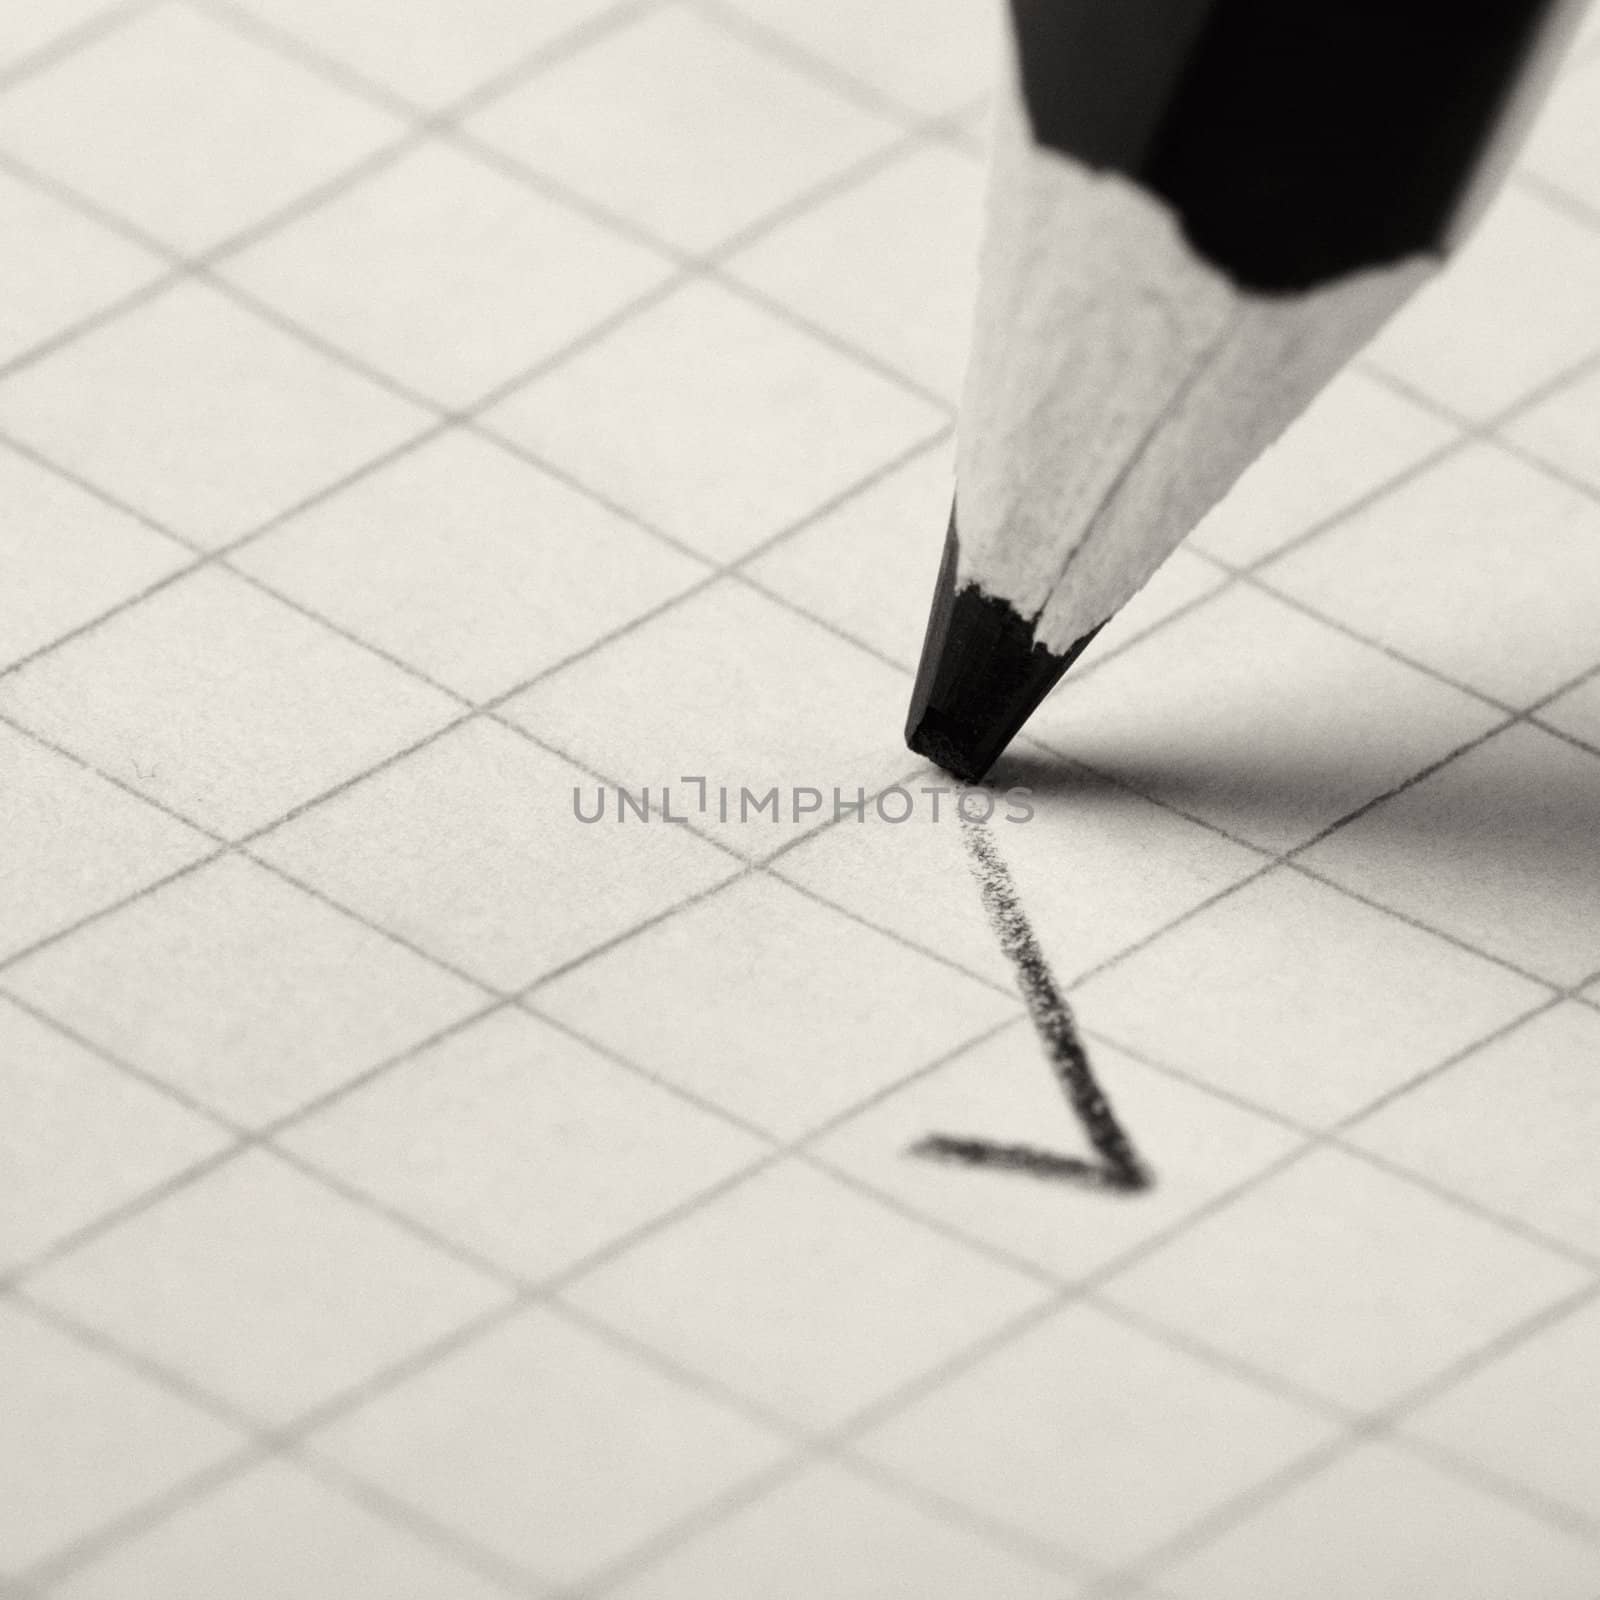 pencil writing a mark. Abstract concept